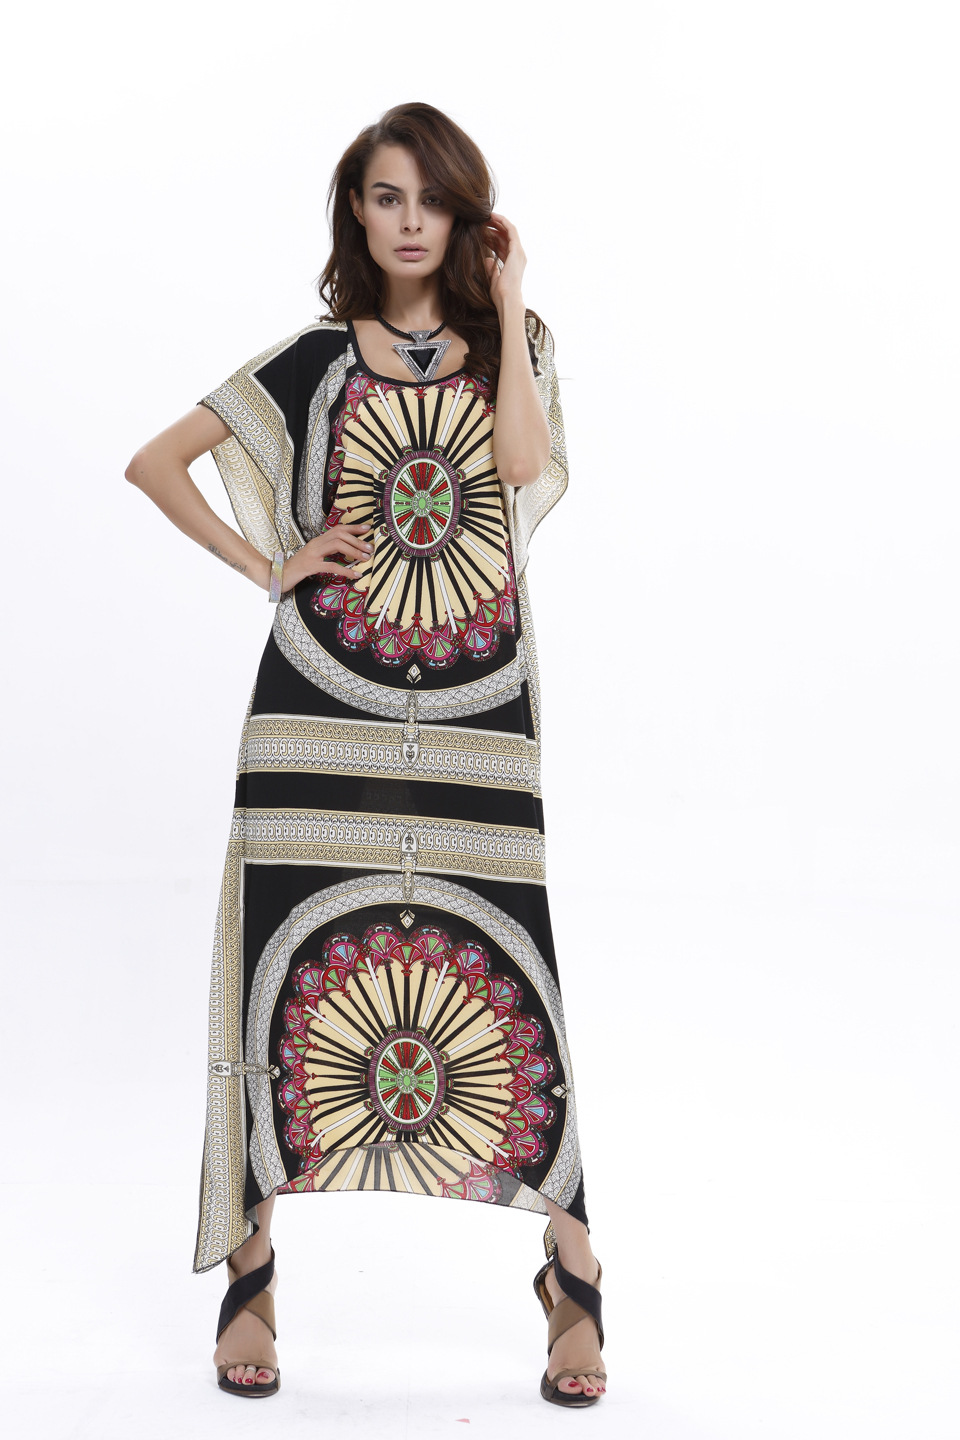 SHOWERSMILE-Brand-National-Dress-Indian-Women-Loose-Tribal-Print-Maxi-Dress-Batwing-Sleeve-Irregular-32660610703